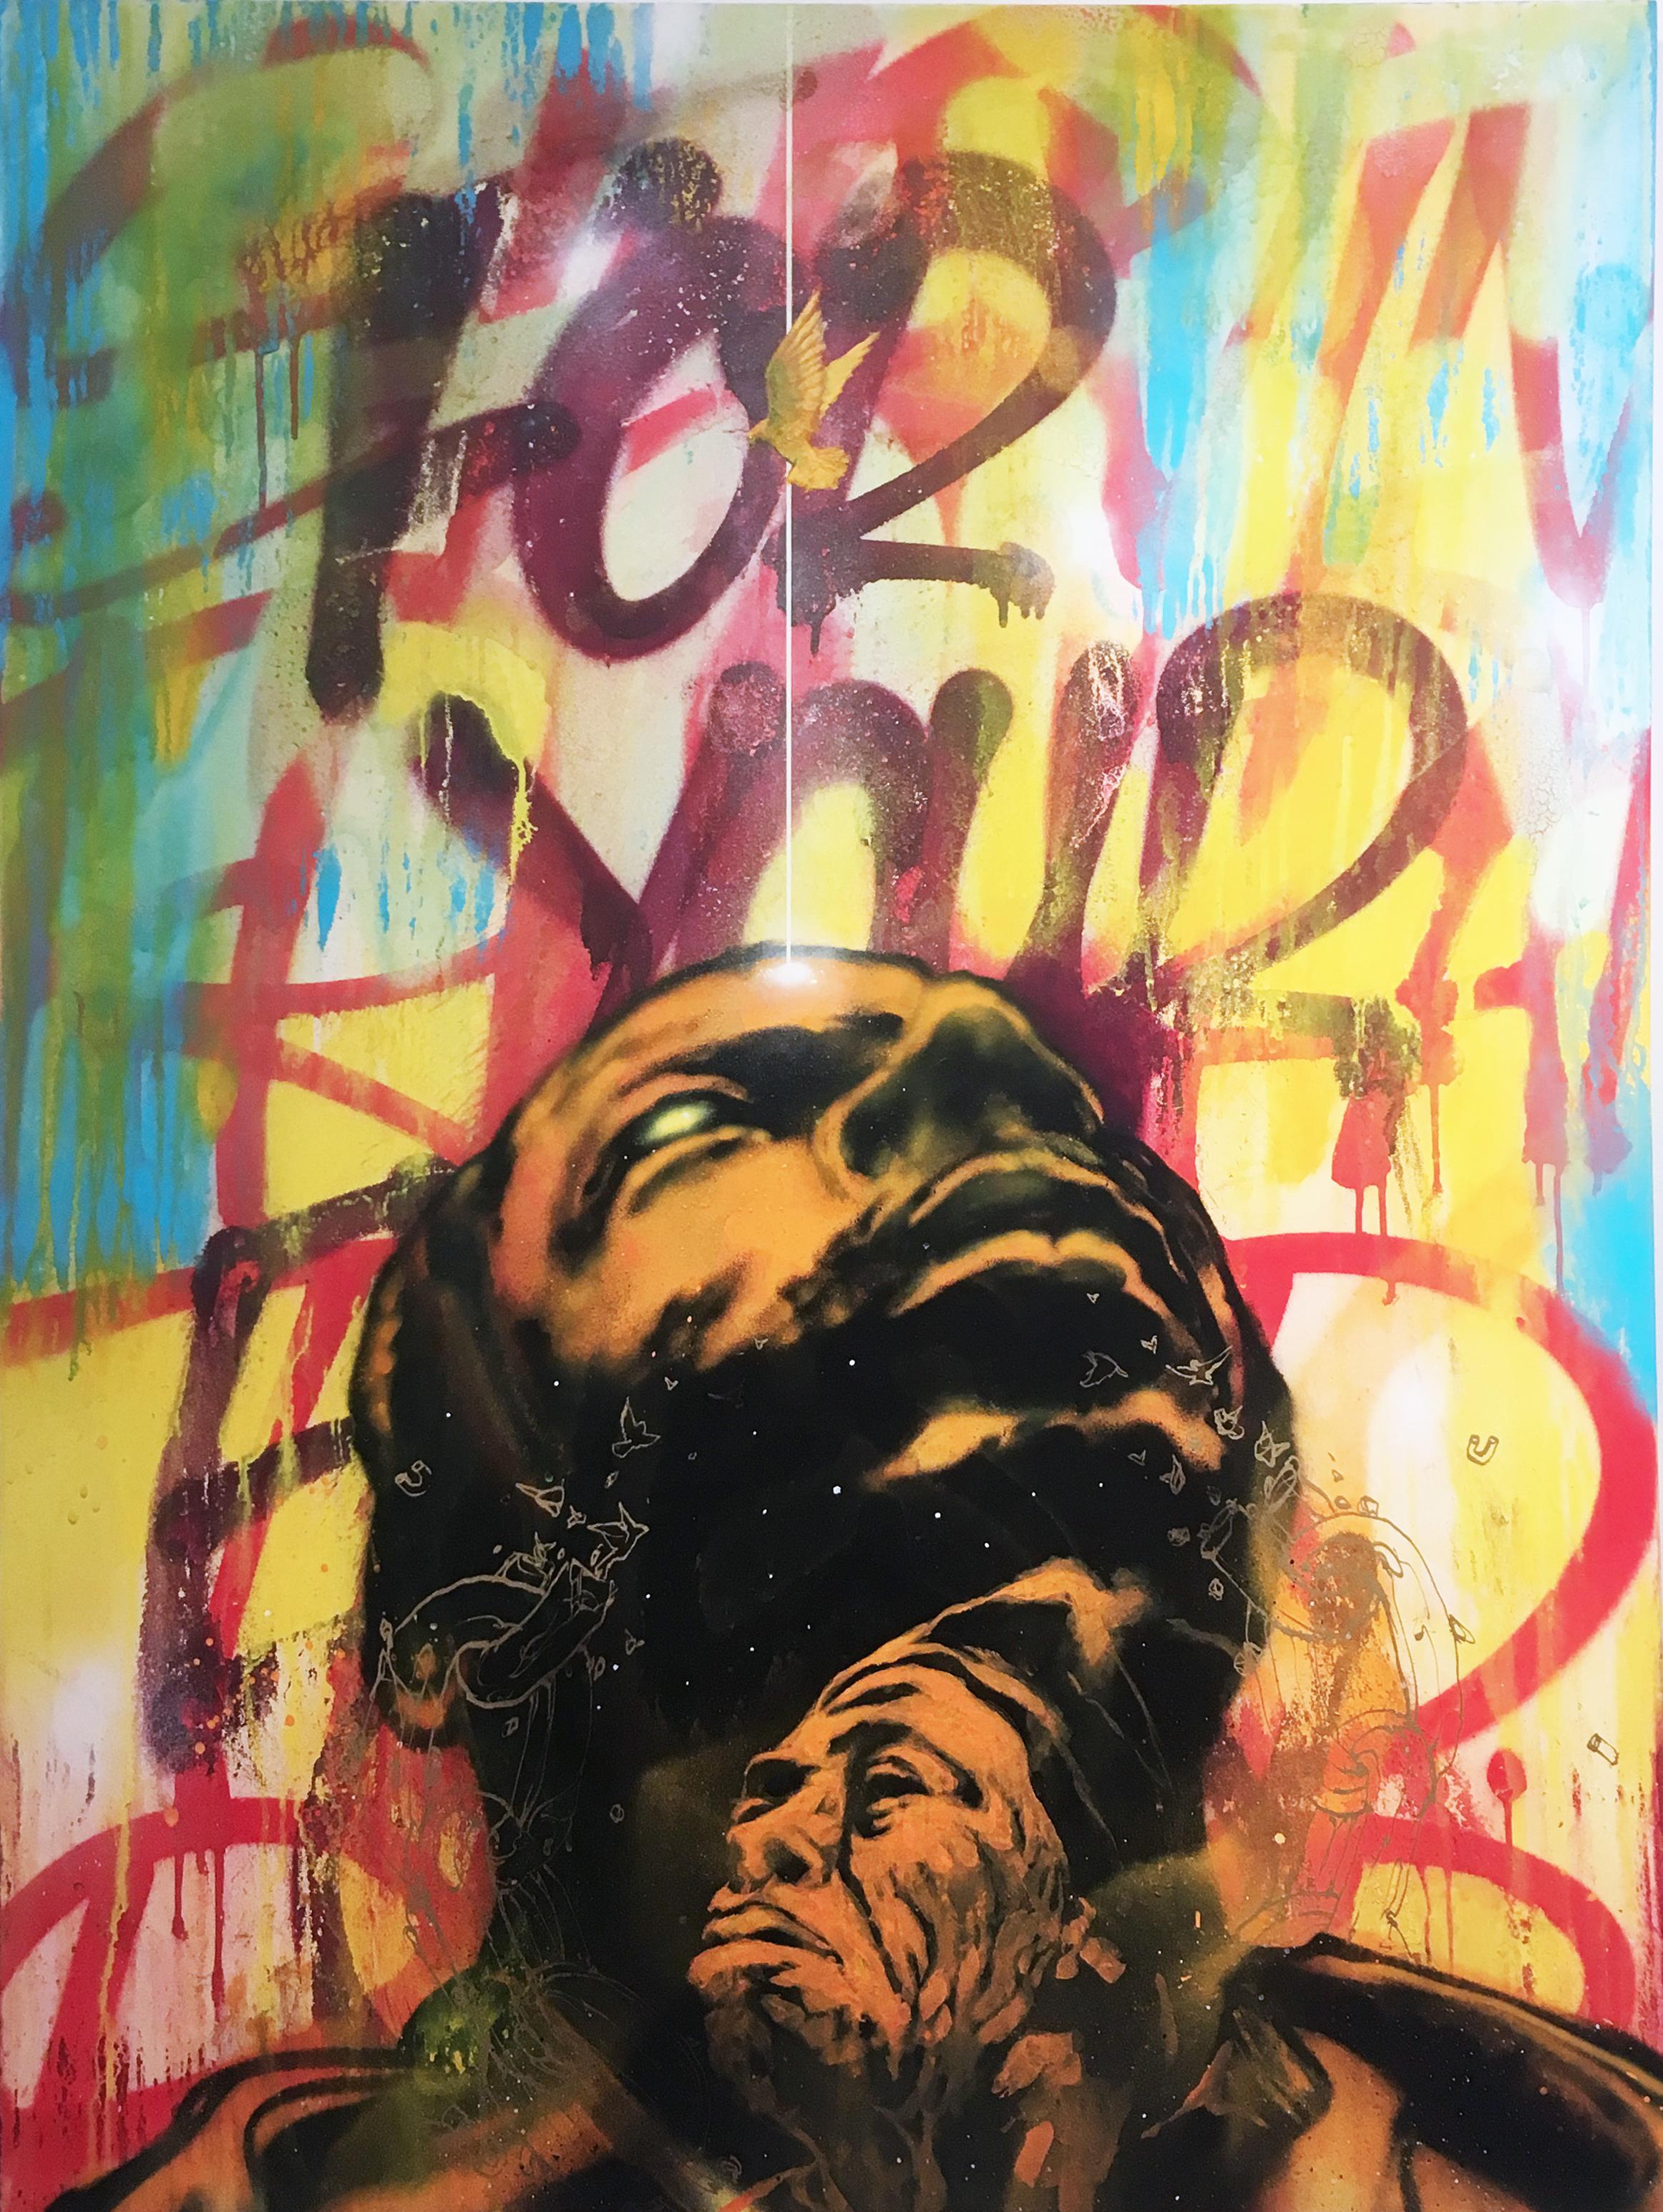 Break Free by street artist MUSTART, portrait & text, spray paint, bold & bright